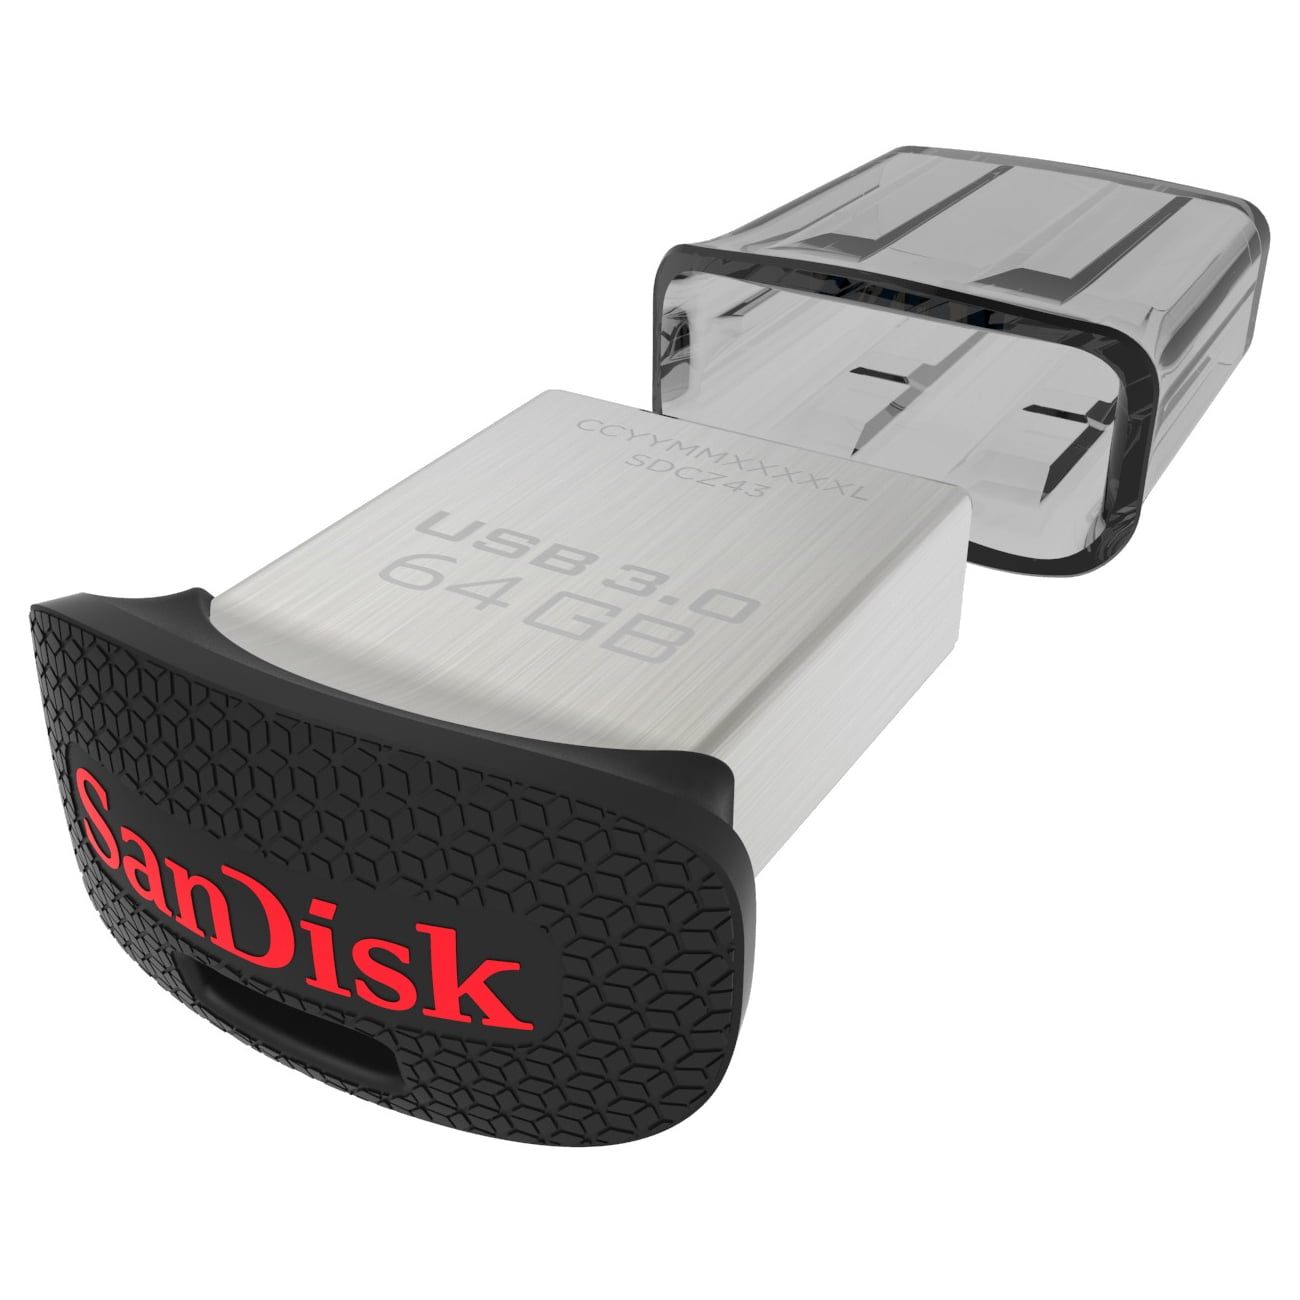 SanDisk 16GB Ultra USB Flash Drive - SDCZ43-016G-A46 - Walmart.com